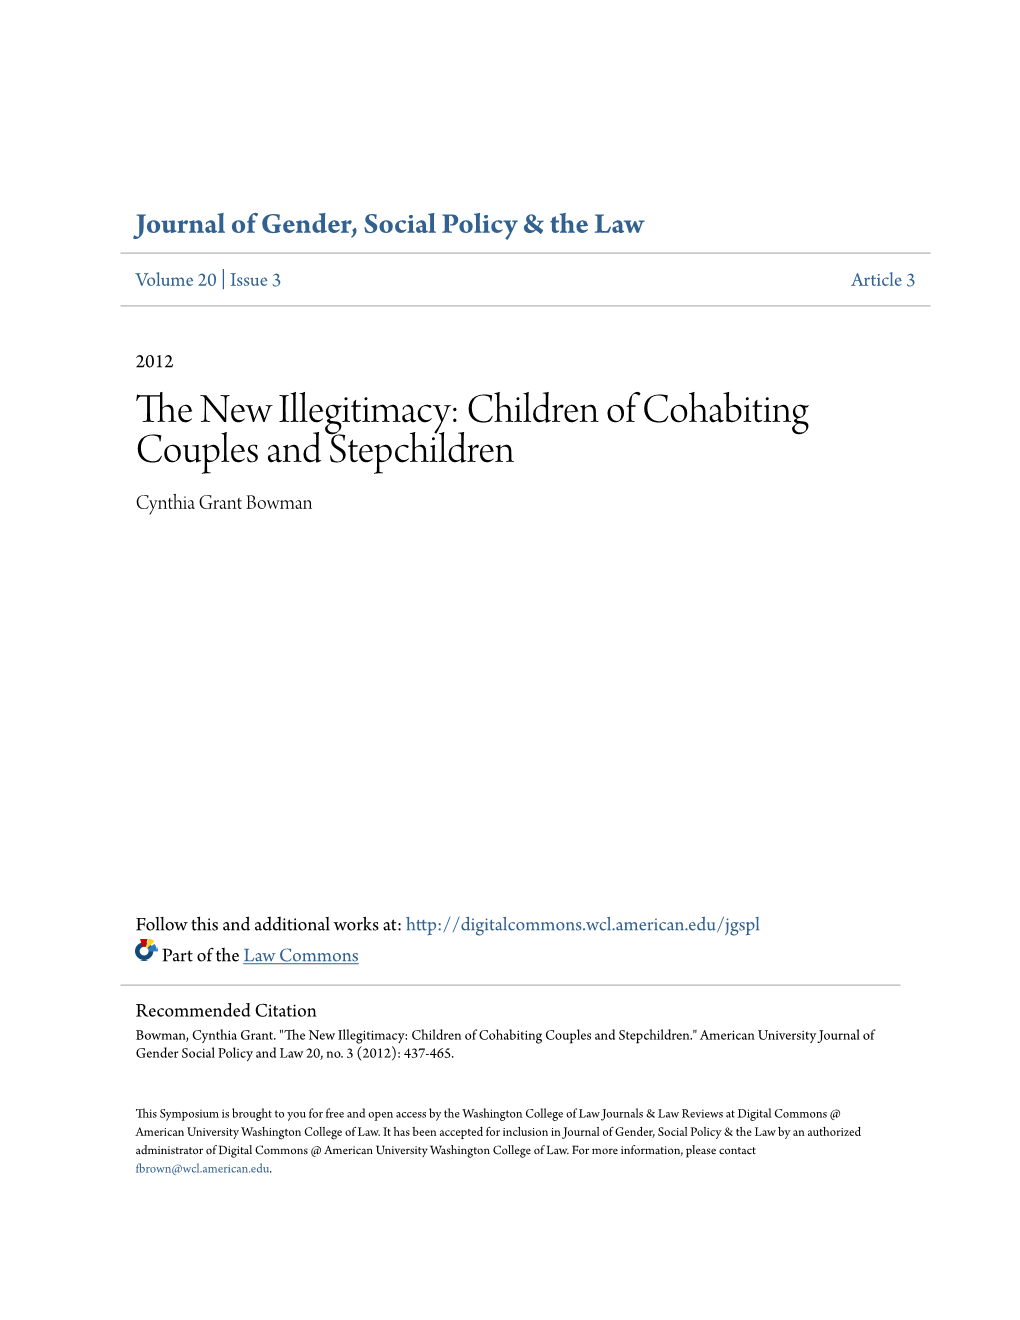 The New Illegitimacy: Children of Cohabiting Couples and Stepchildren